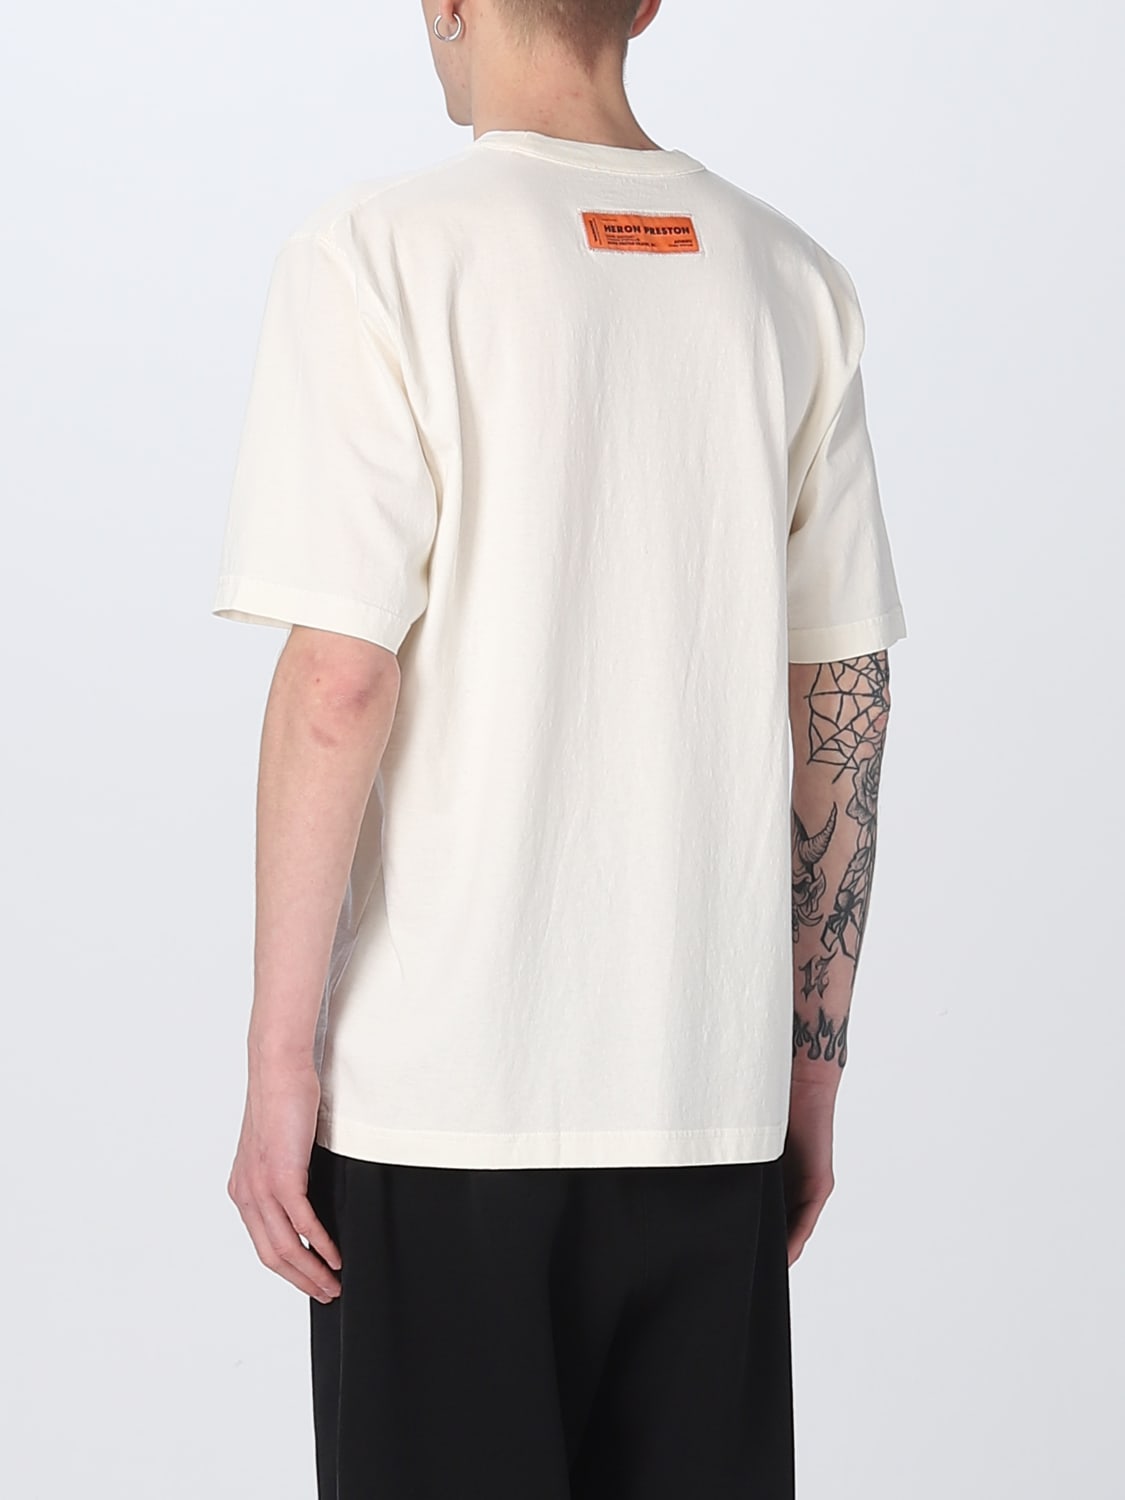 Heron Preston Outlet: t-shirt for man - White | Heron Preston t-shirt ...